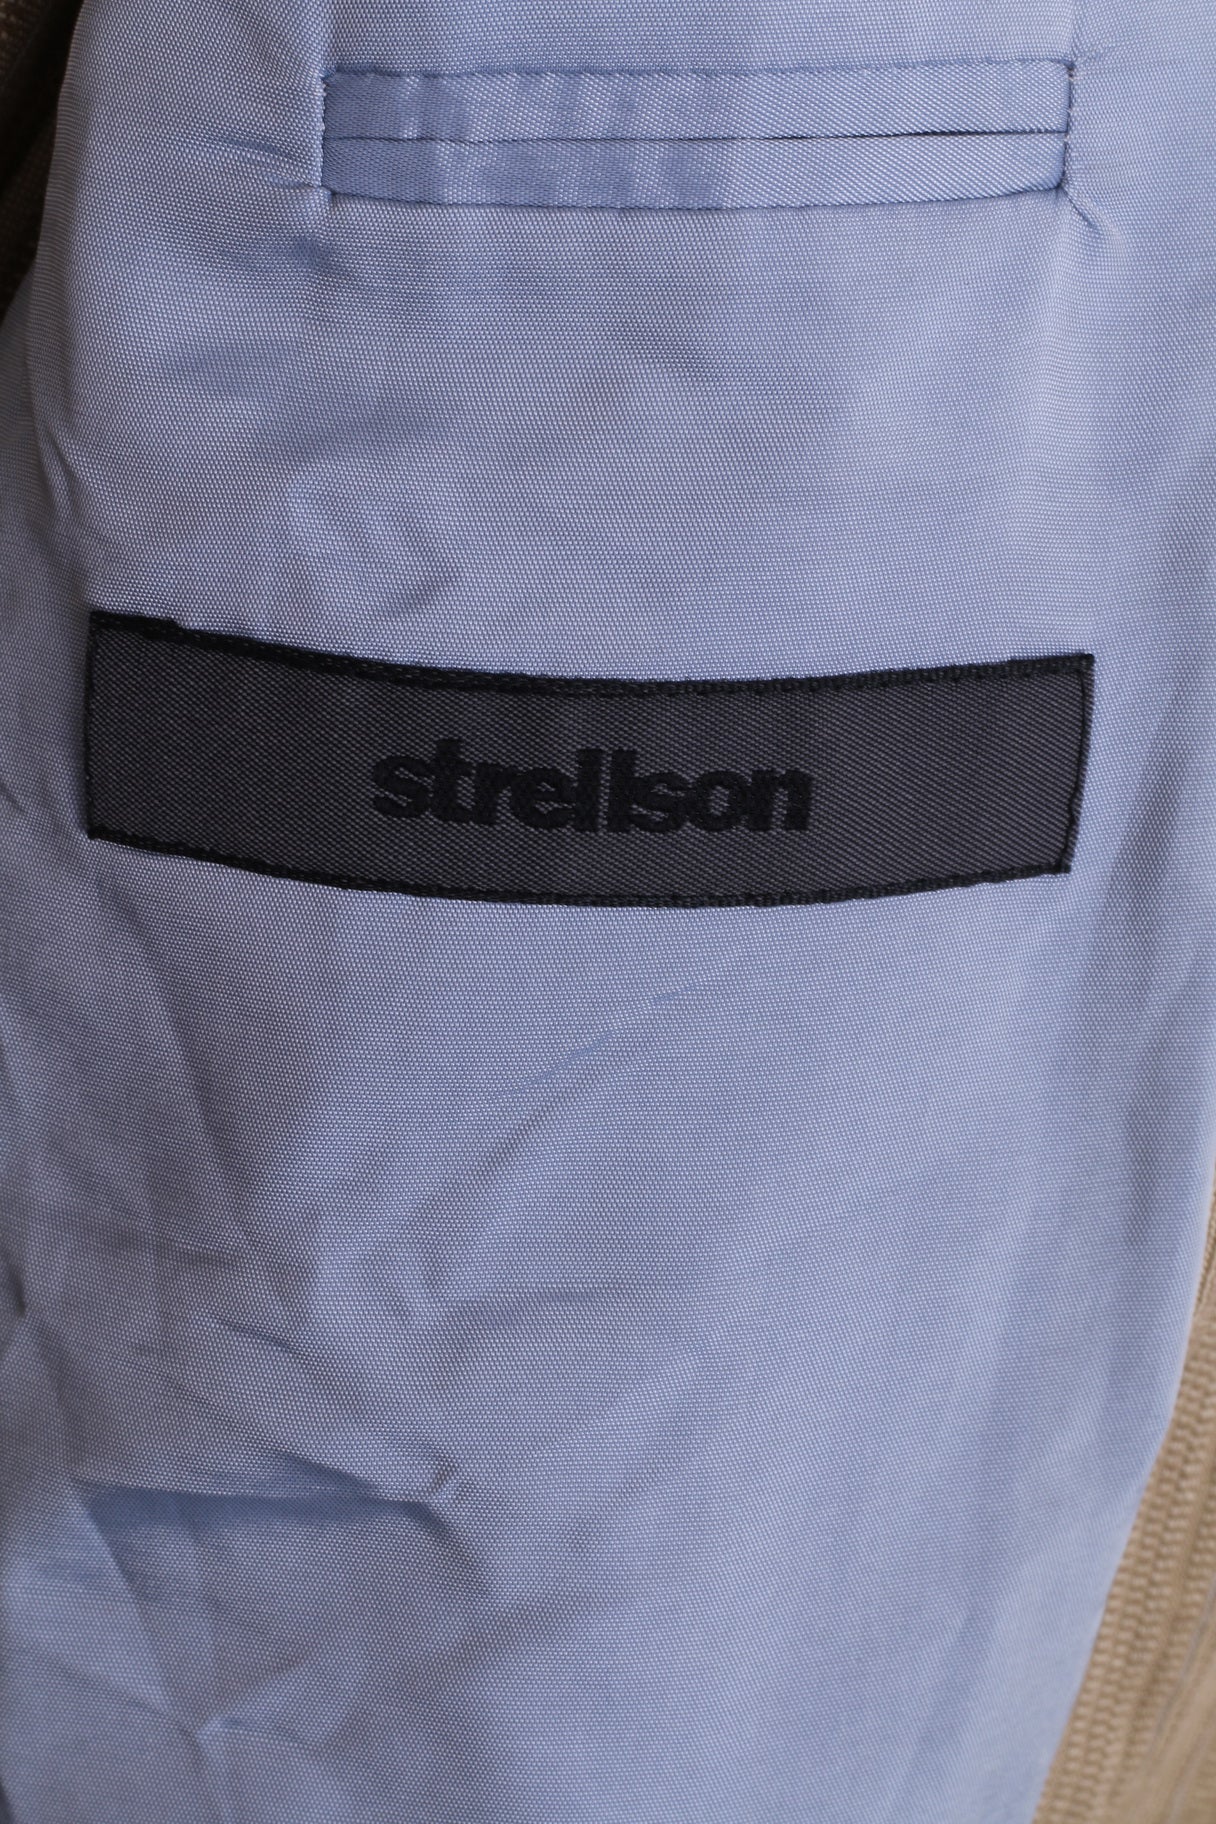 Strellson Mens 48 M Blazer Jacket Single Breasted Beige Striped Style Luccio Cotton Shoulder Pads